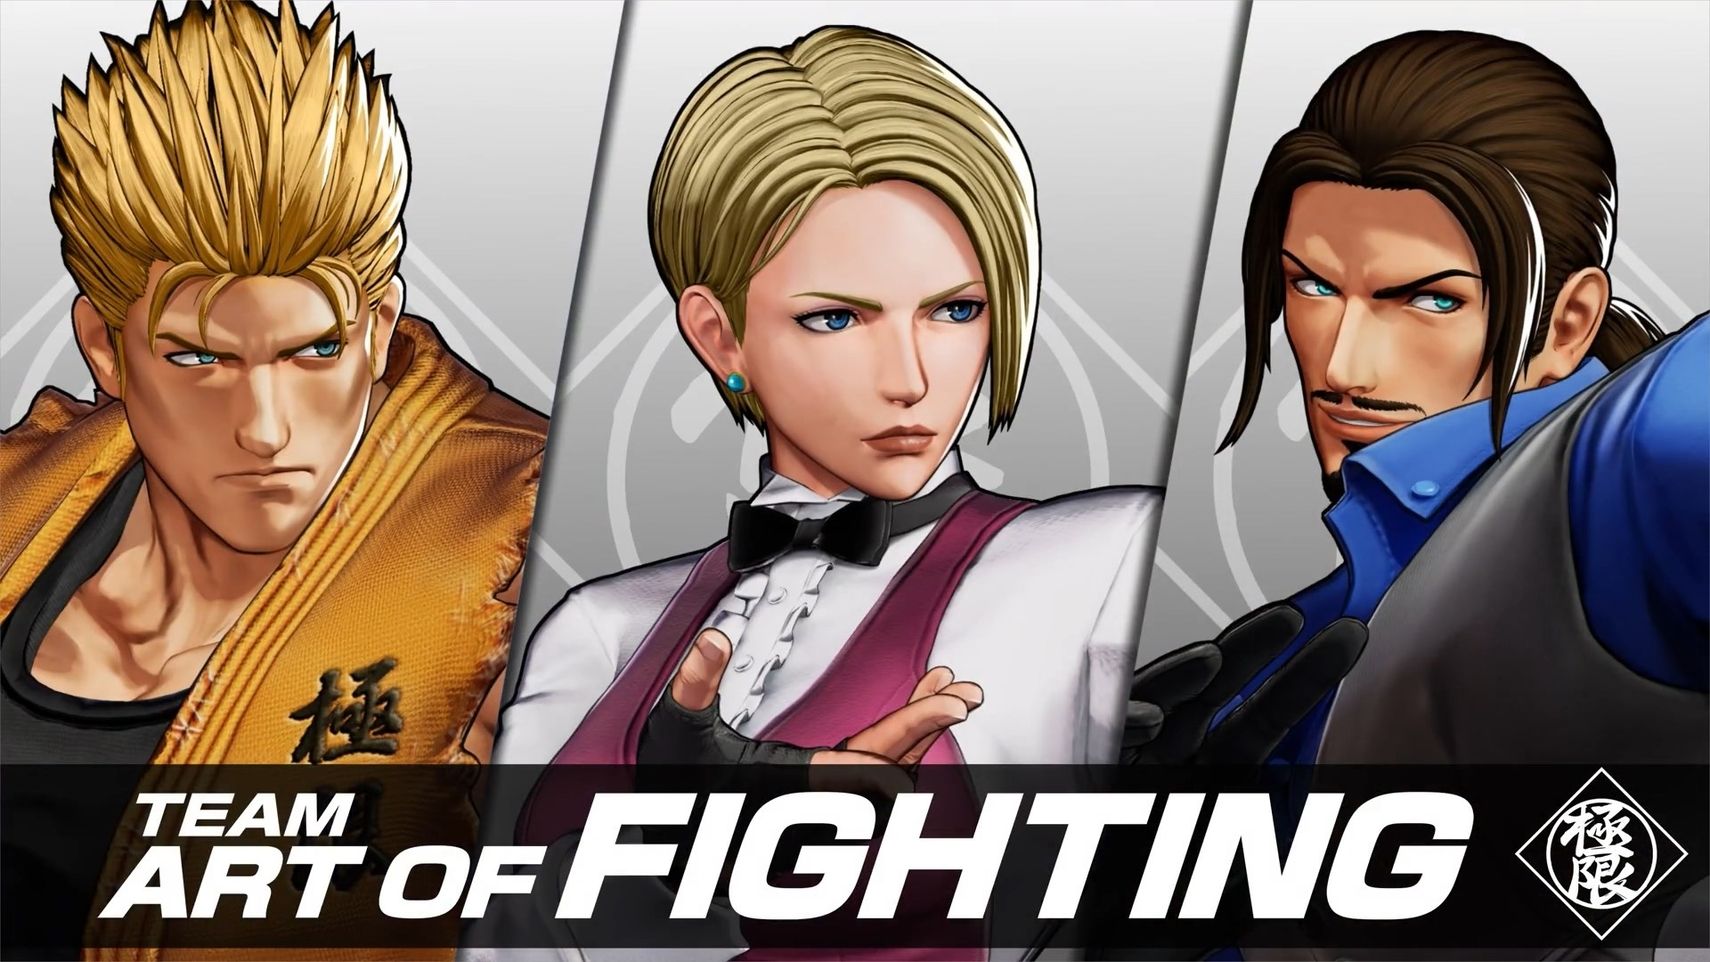 Ryo Sakazaki and Robert Garcia join King of Fighters 15 as Team Art of Fighting